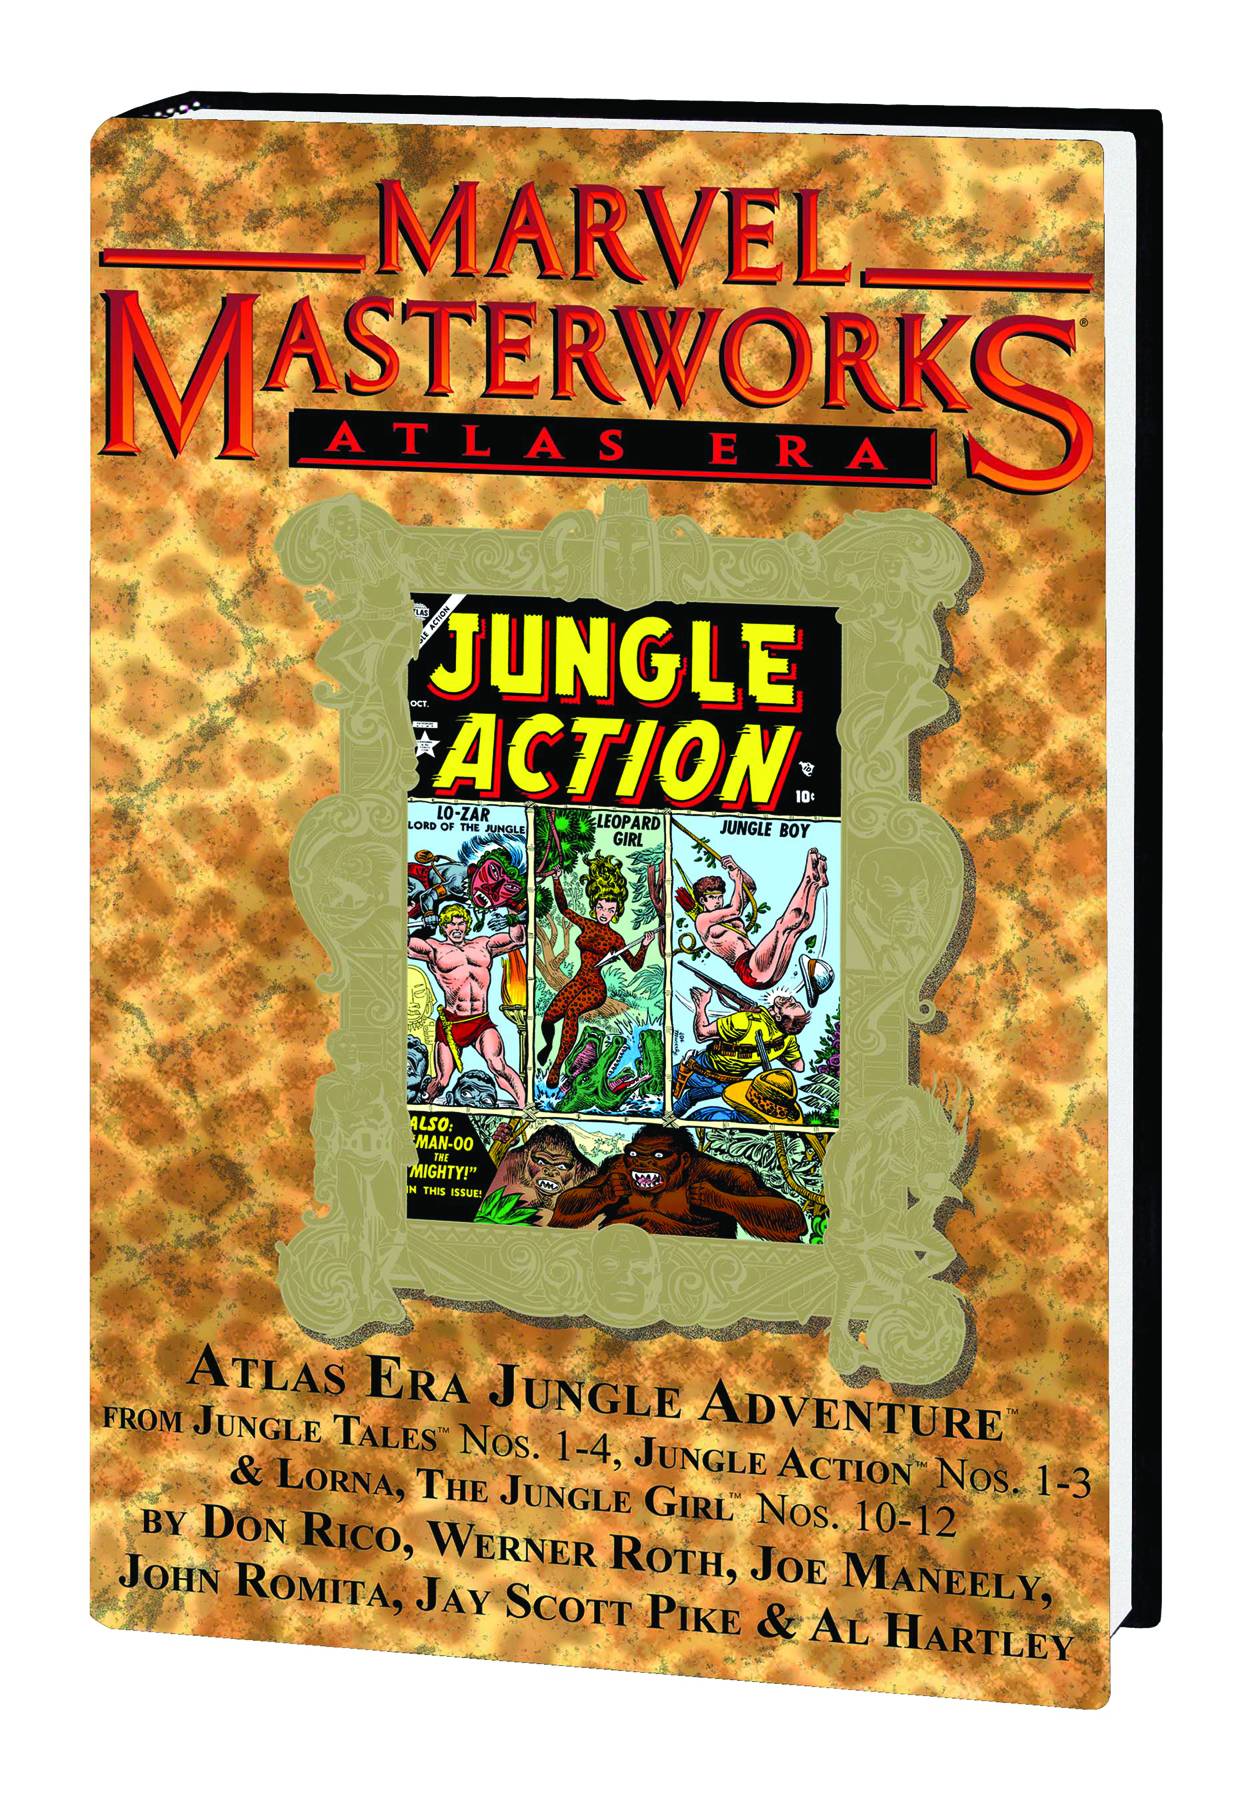 Marvel Masterworks Atlas Era Jungle Adventure Hardcover Volume 2 DM Edition 159